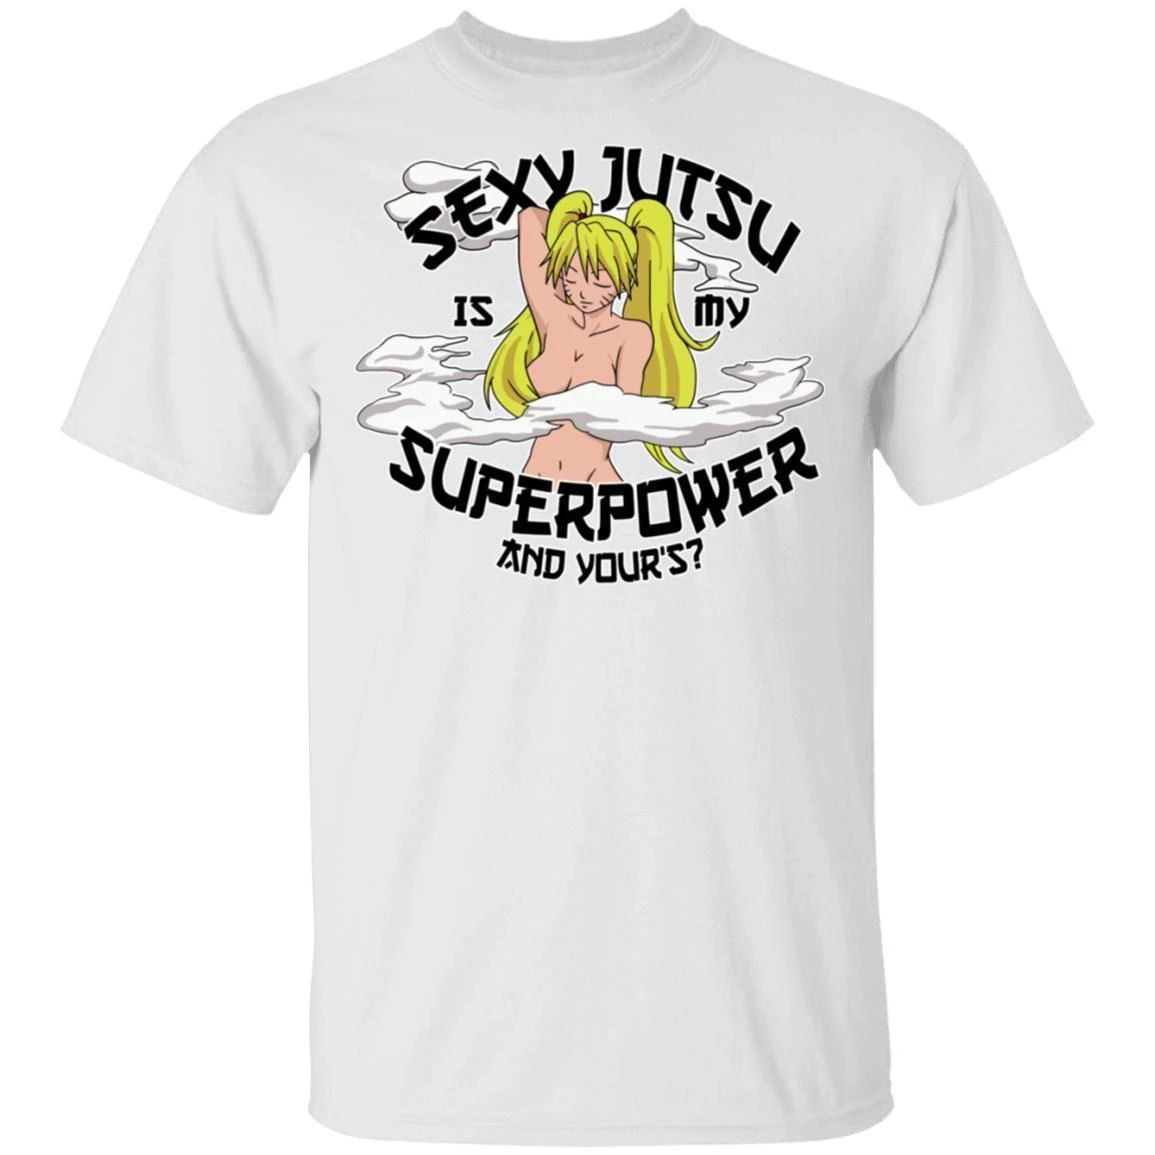 Sexy Jutsu Is My Superpower T Shirt Naruto Anime Tee